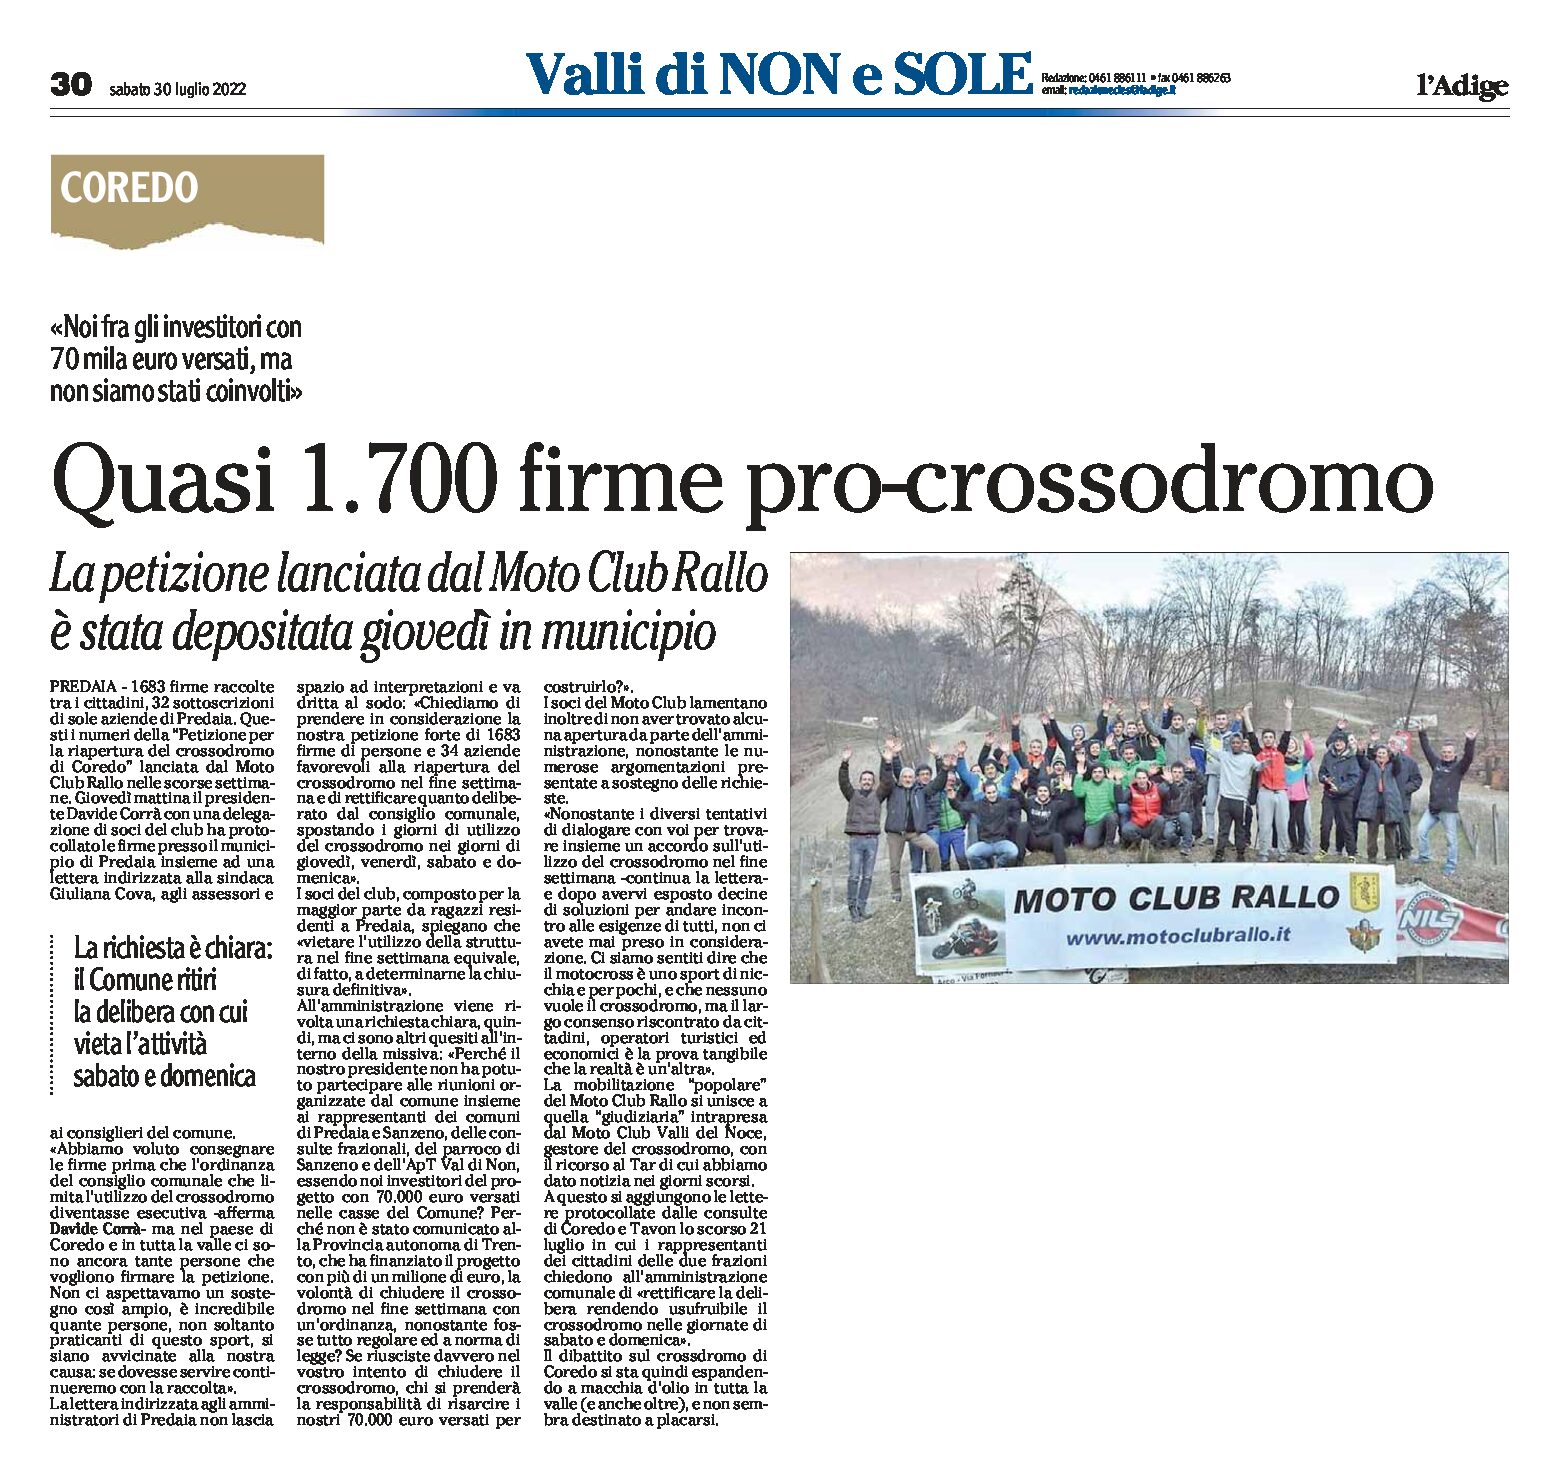 Coredo: quasi 1700 firme pro-crossodromo